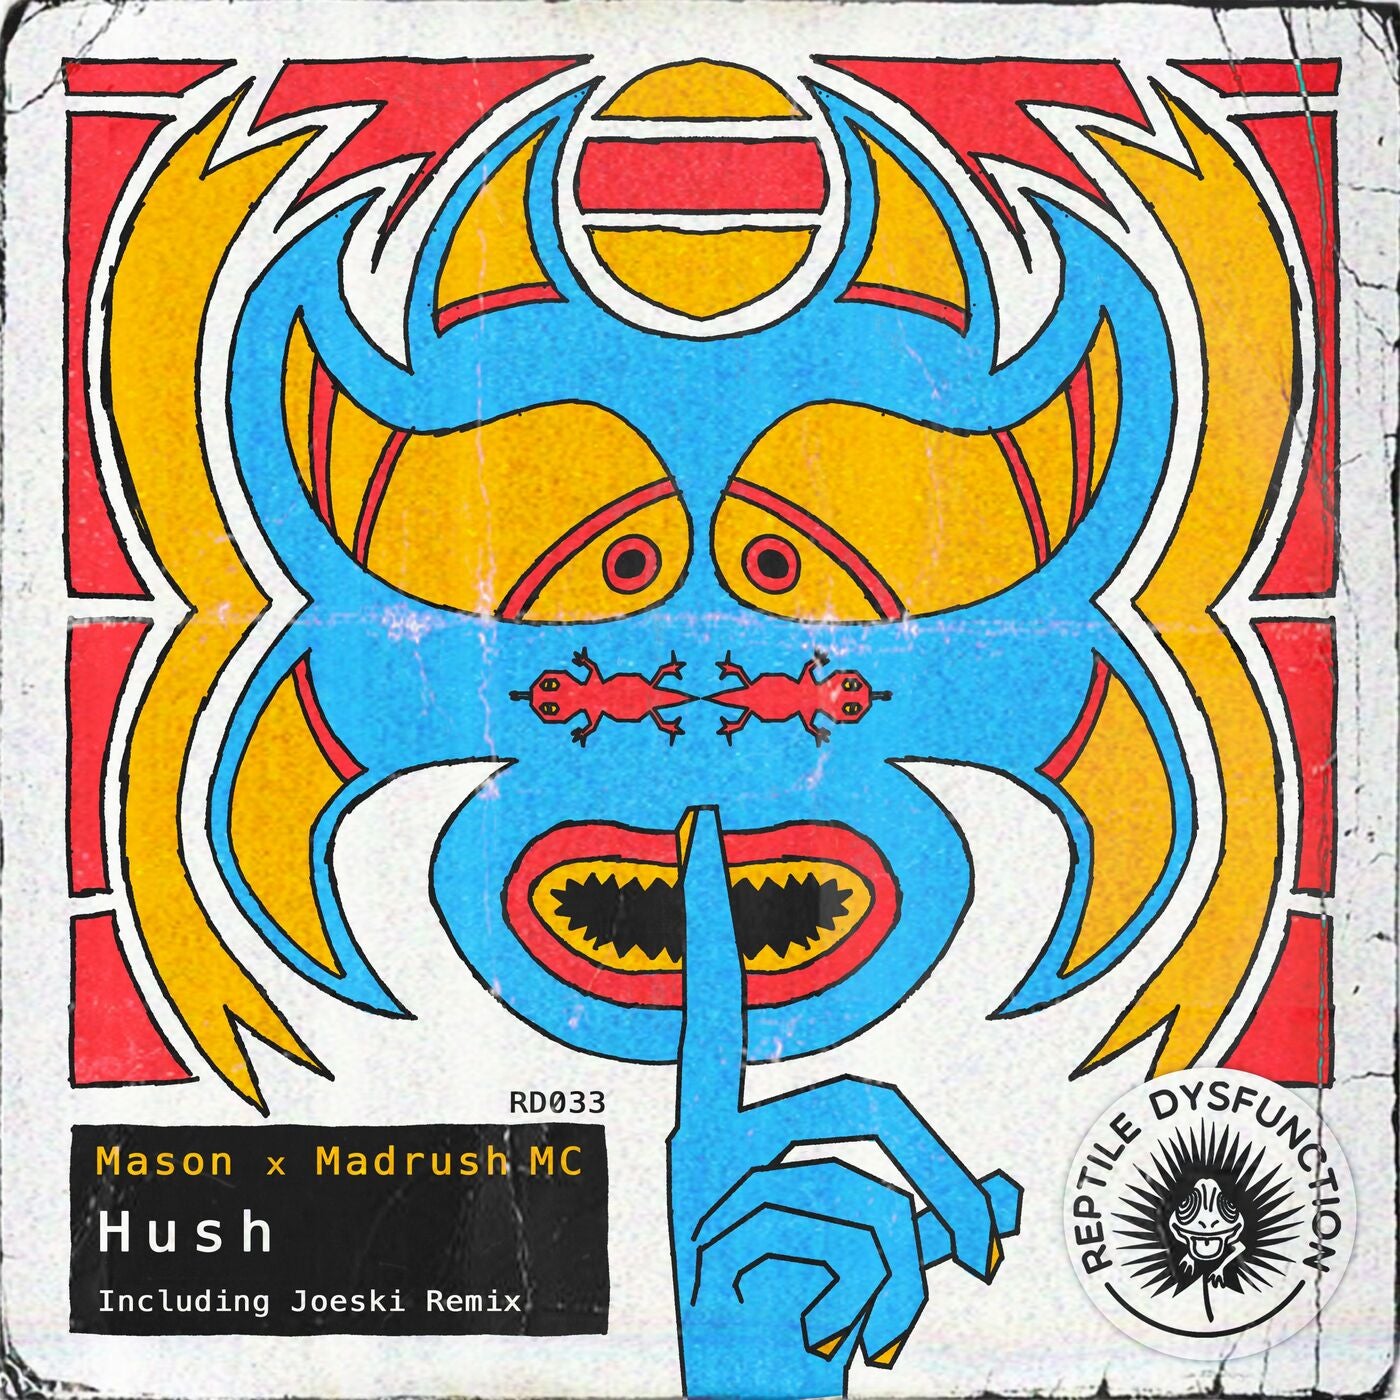 Mason, MadRush MC – Hush [RD033D]